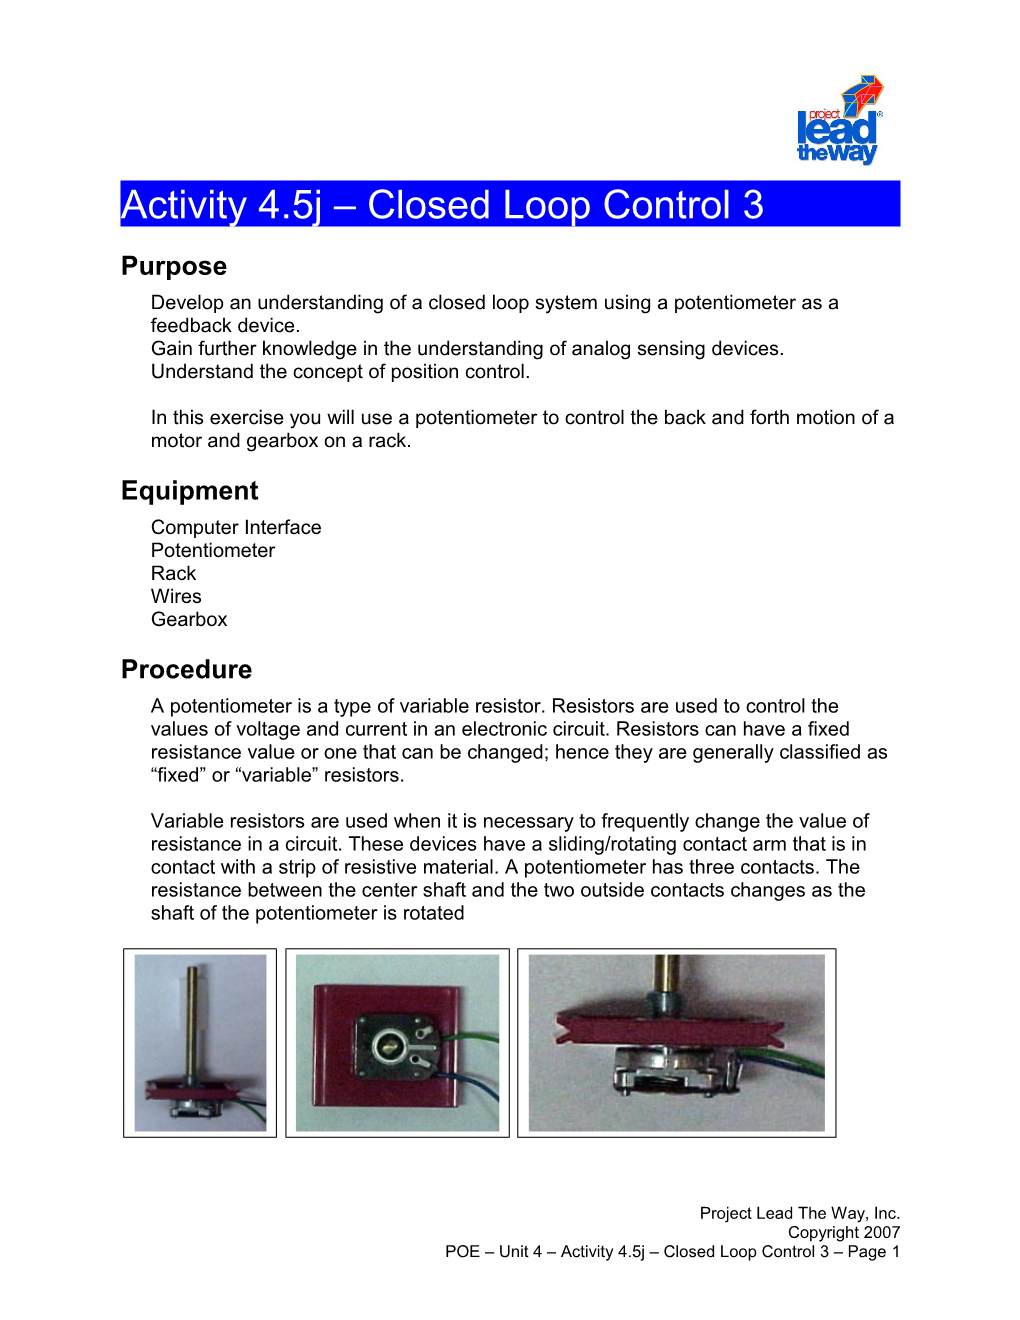 Activity 4.5J - Closed Loop Control 3